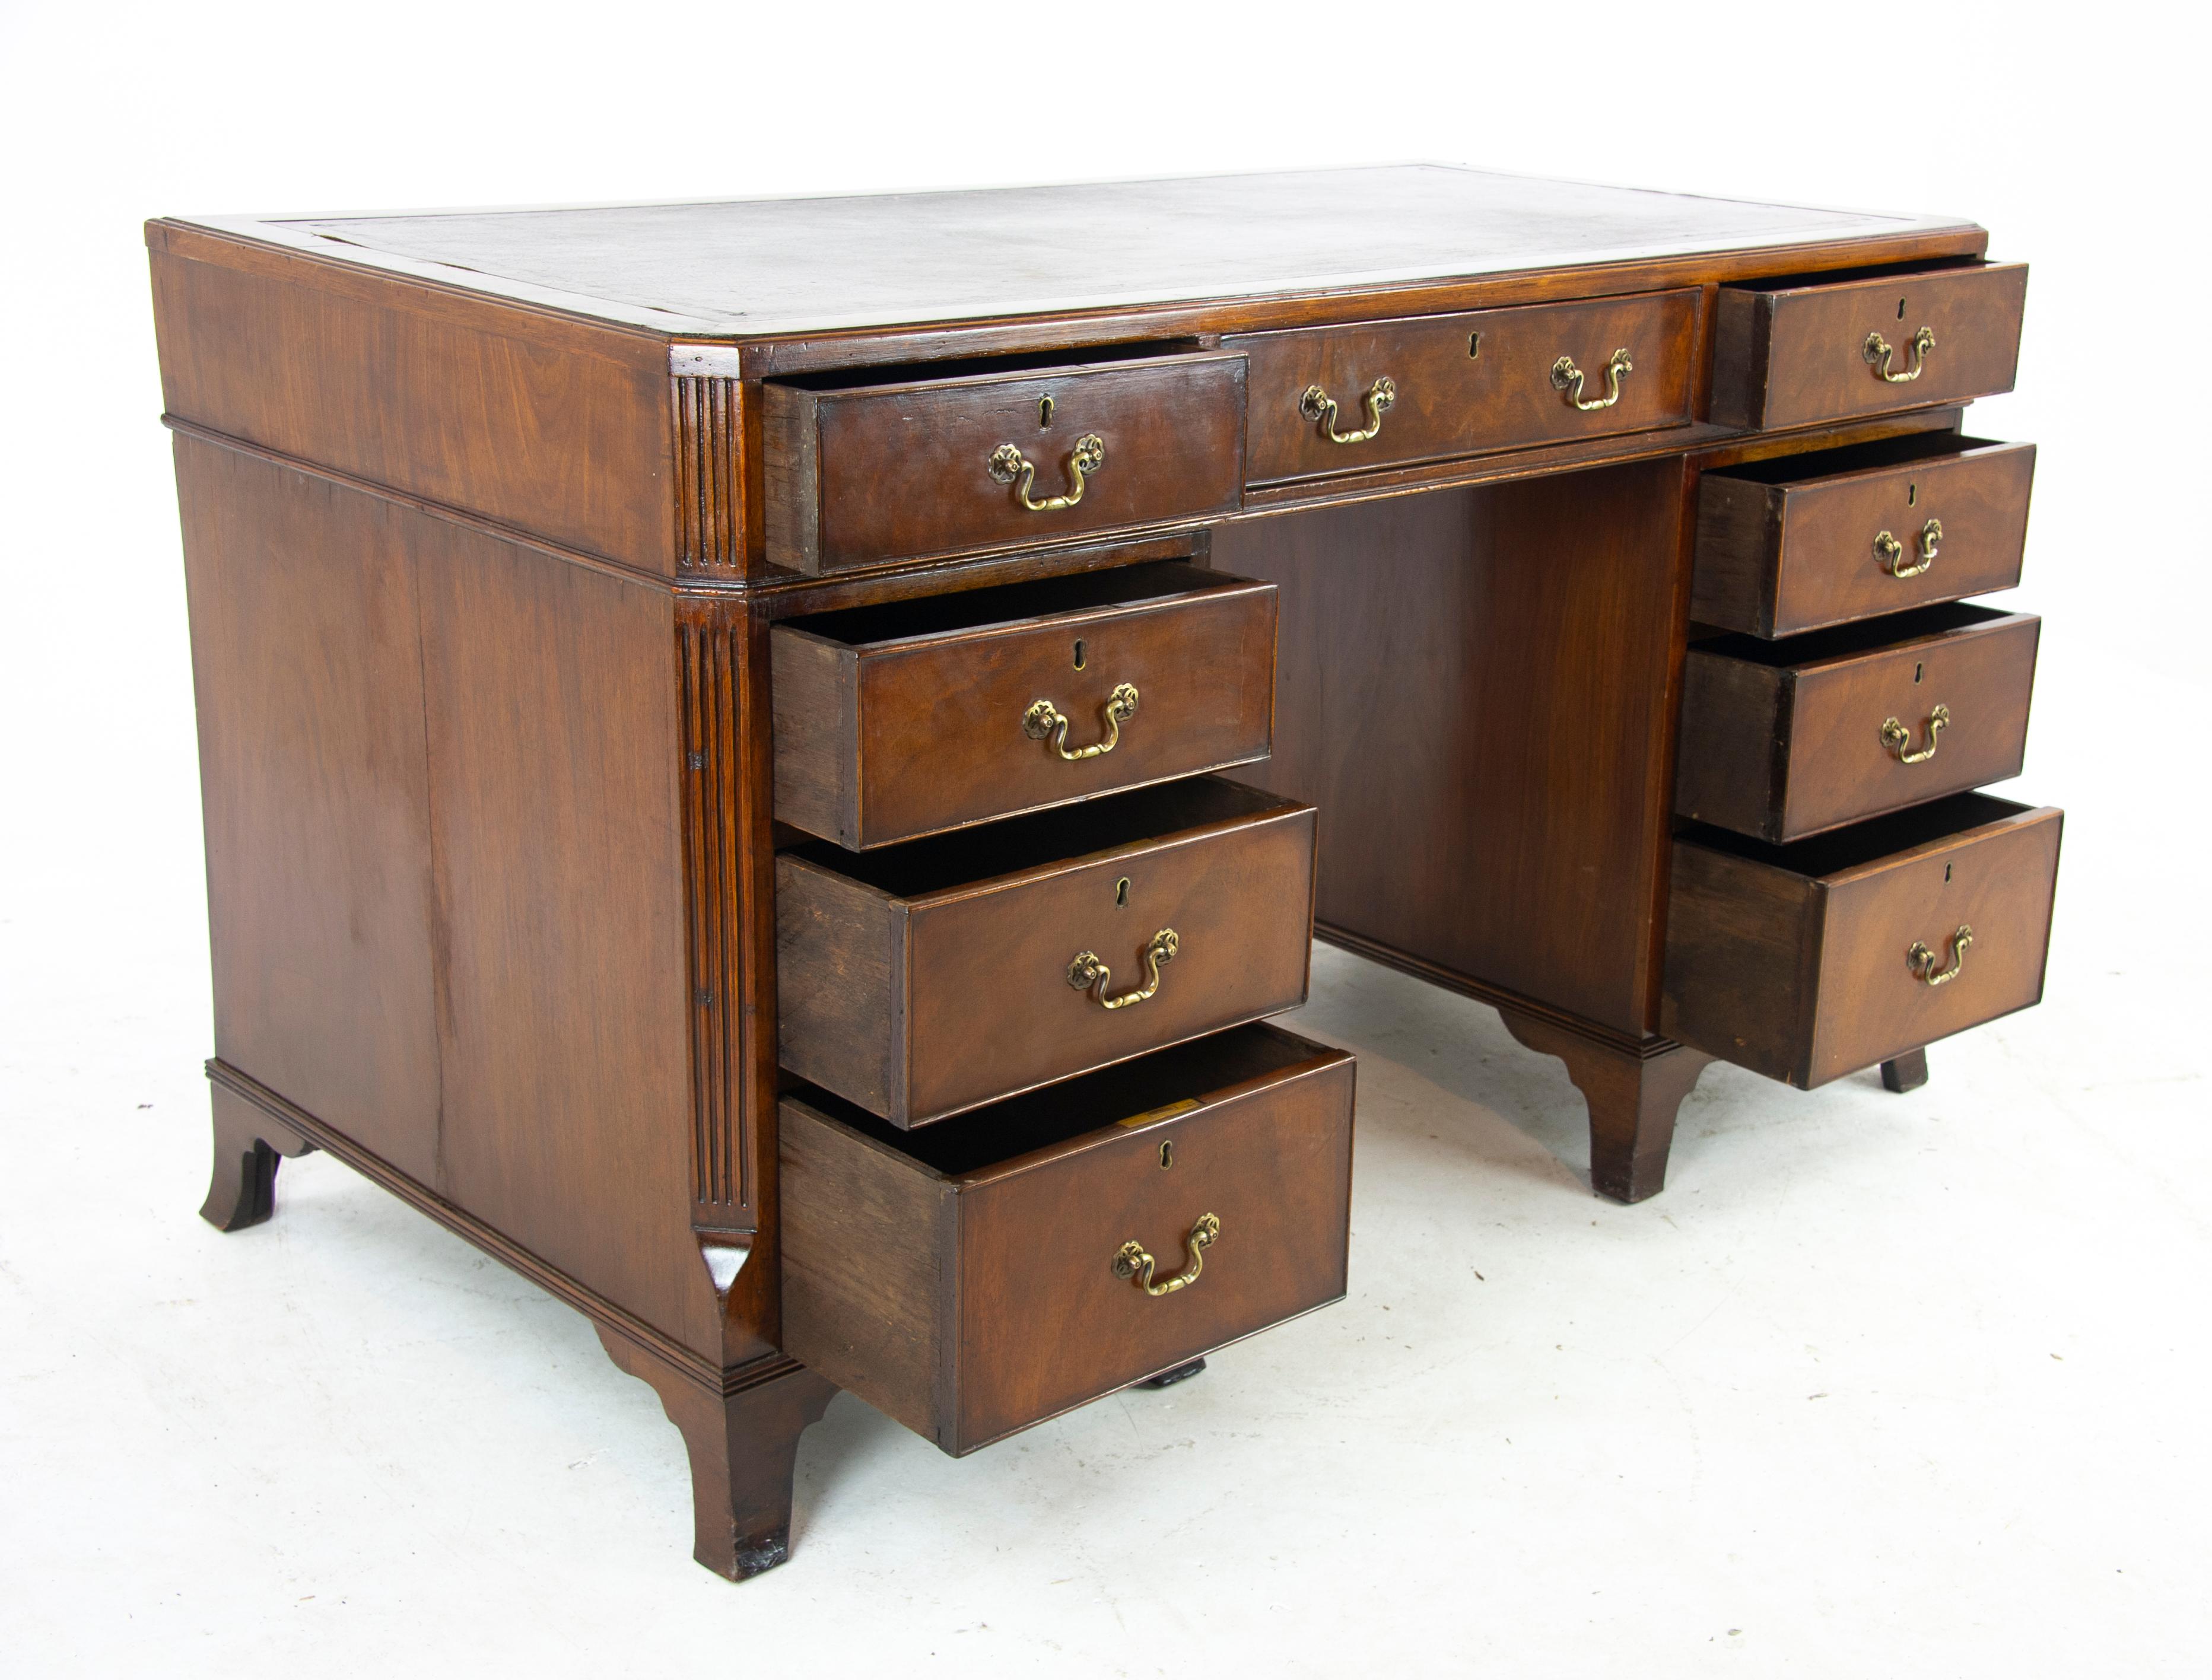 Double Pedestal Desk, Walnut Desk, Leather Top, Scotland, 1920, Antiques, B1283 (Schottisch)